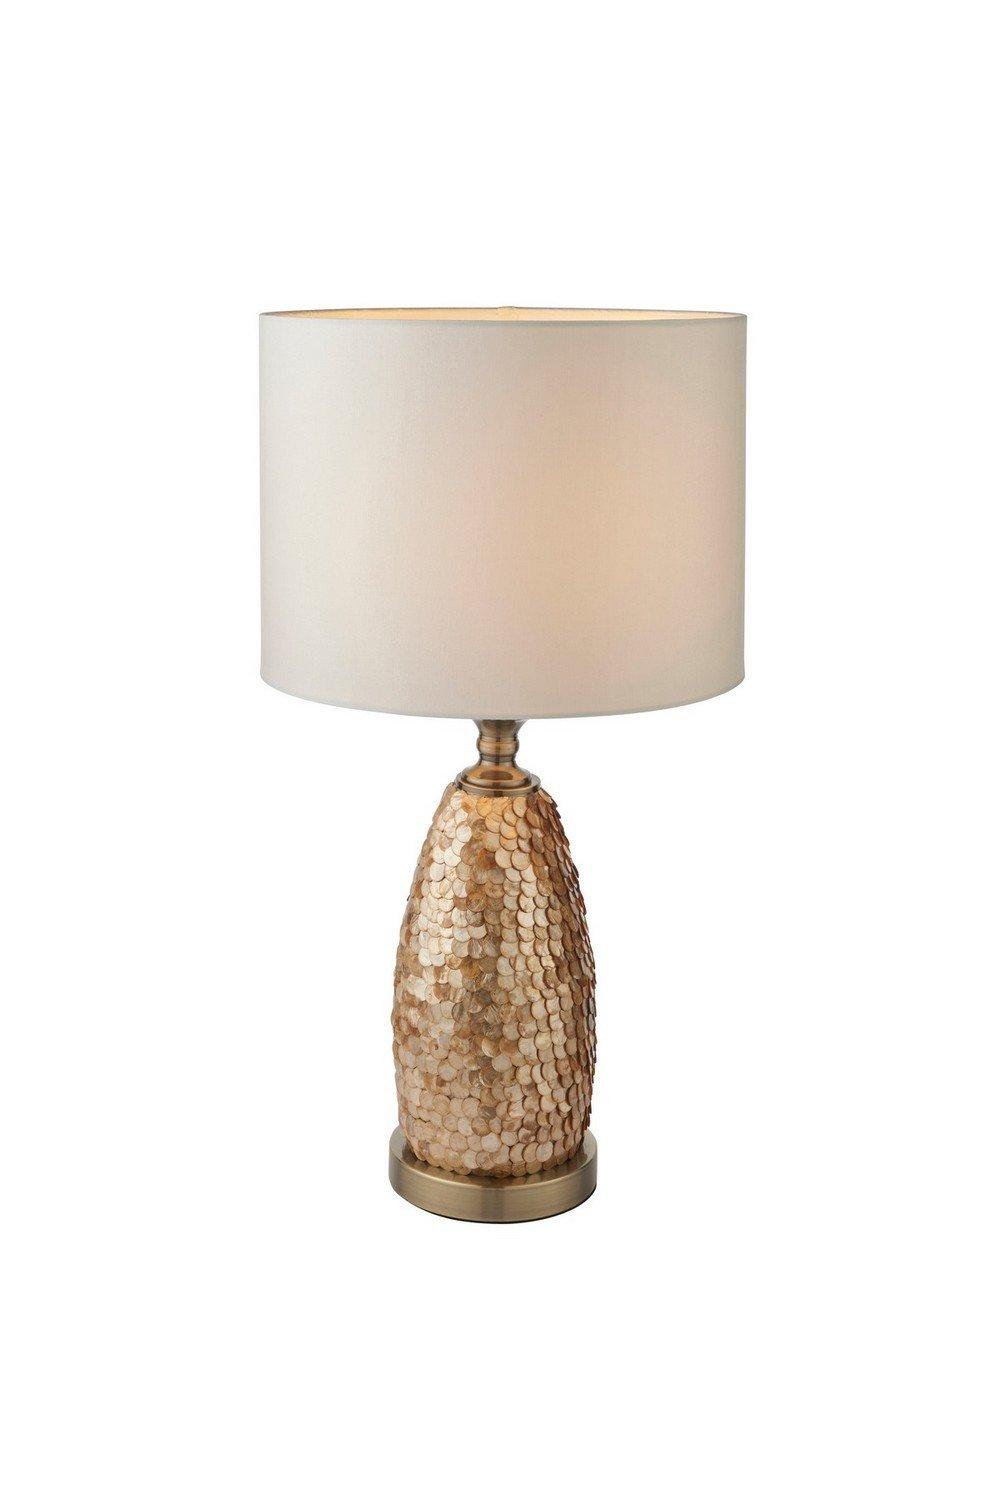 Dahlia Table Lamp Capiz Detail Antique Brass Plate Ivory Fabric Shade